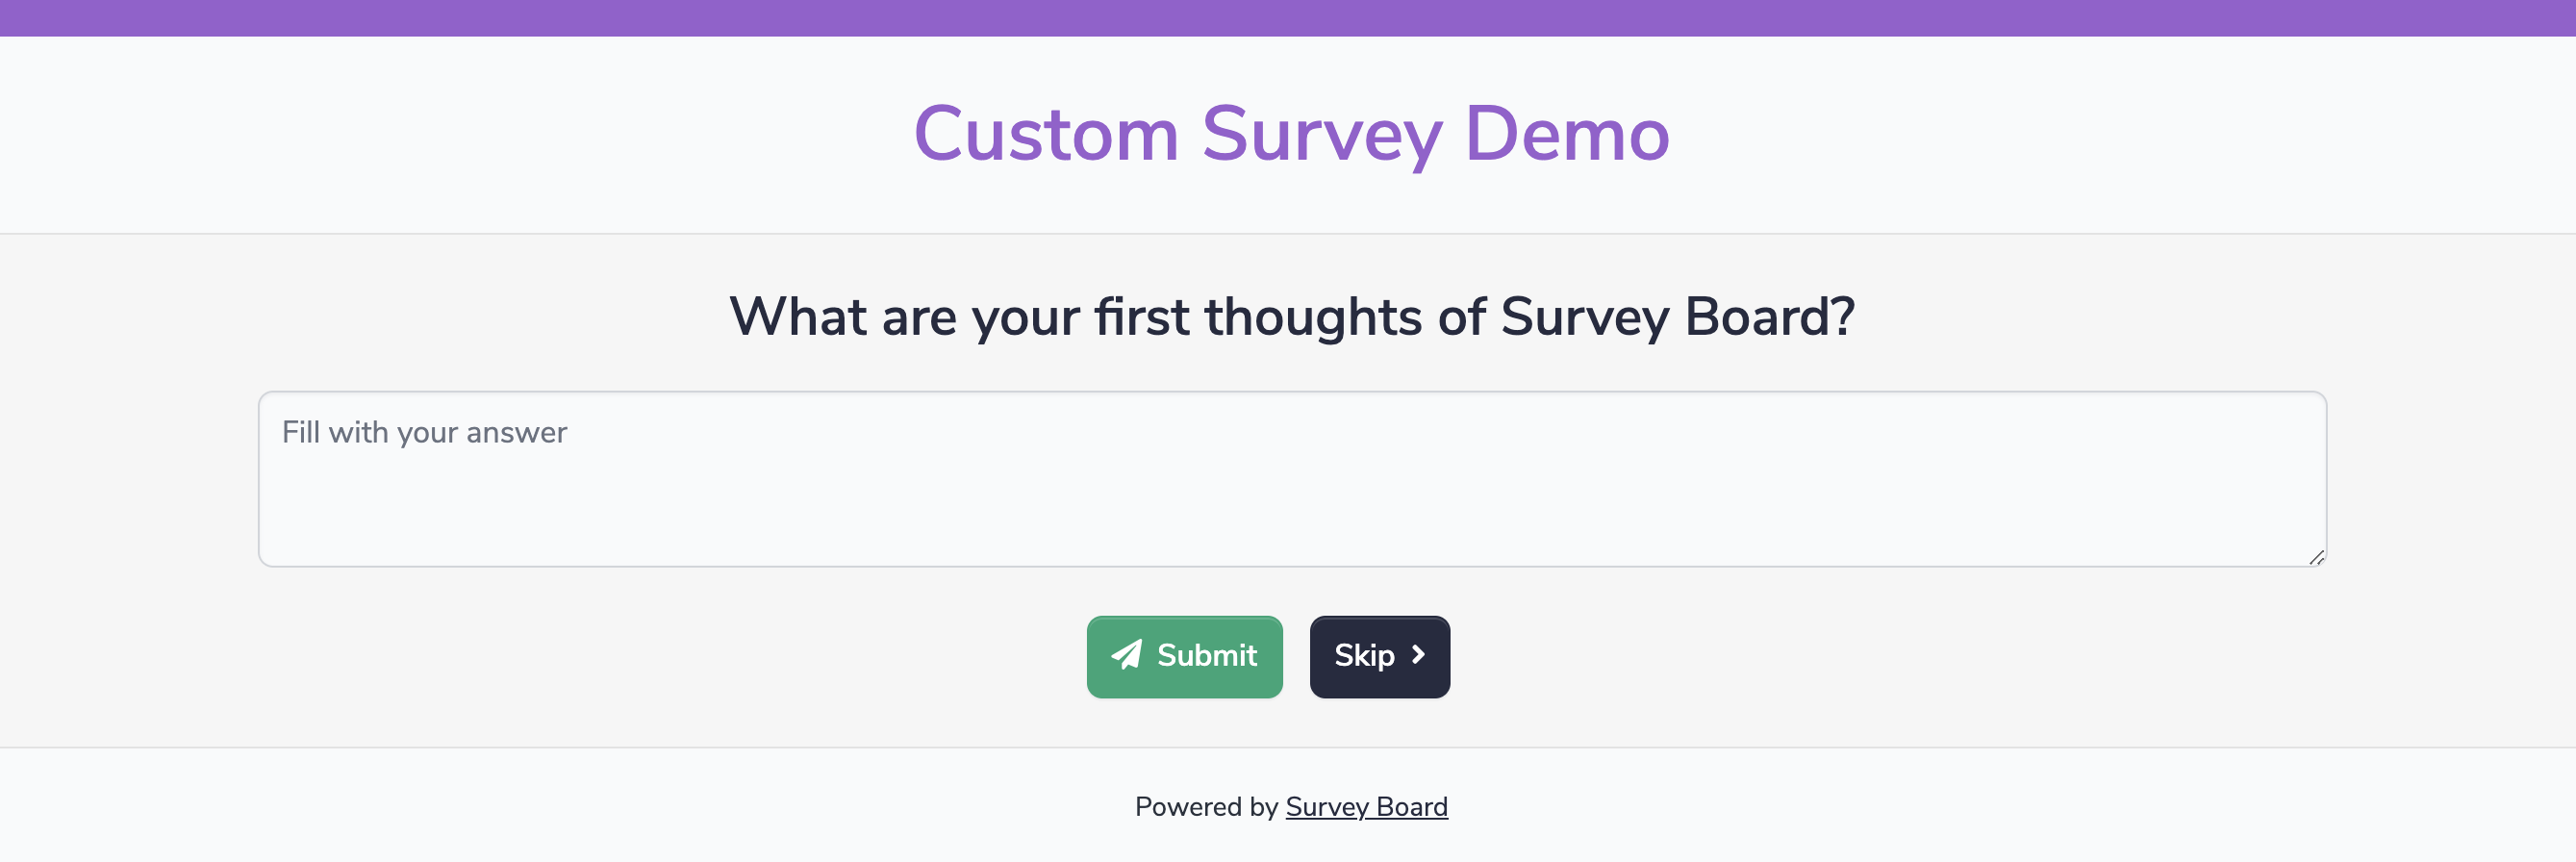 Custom Survey